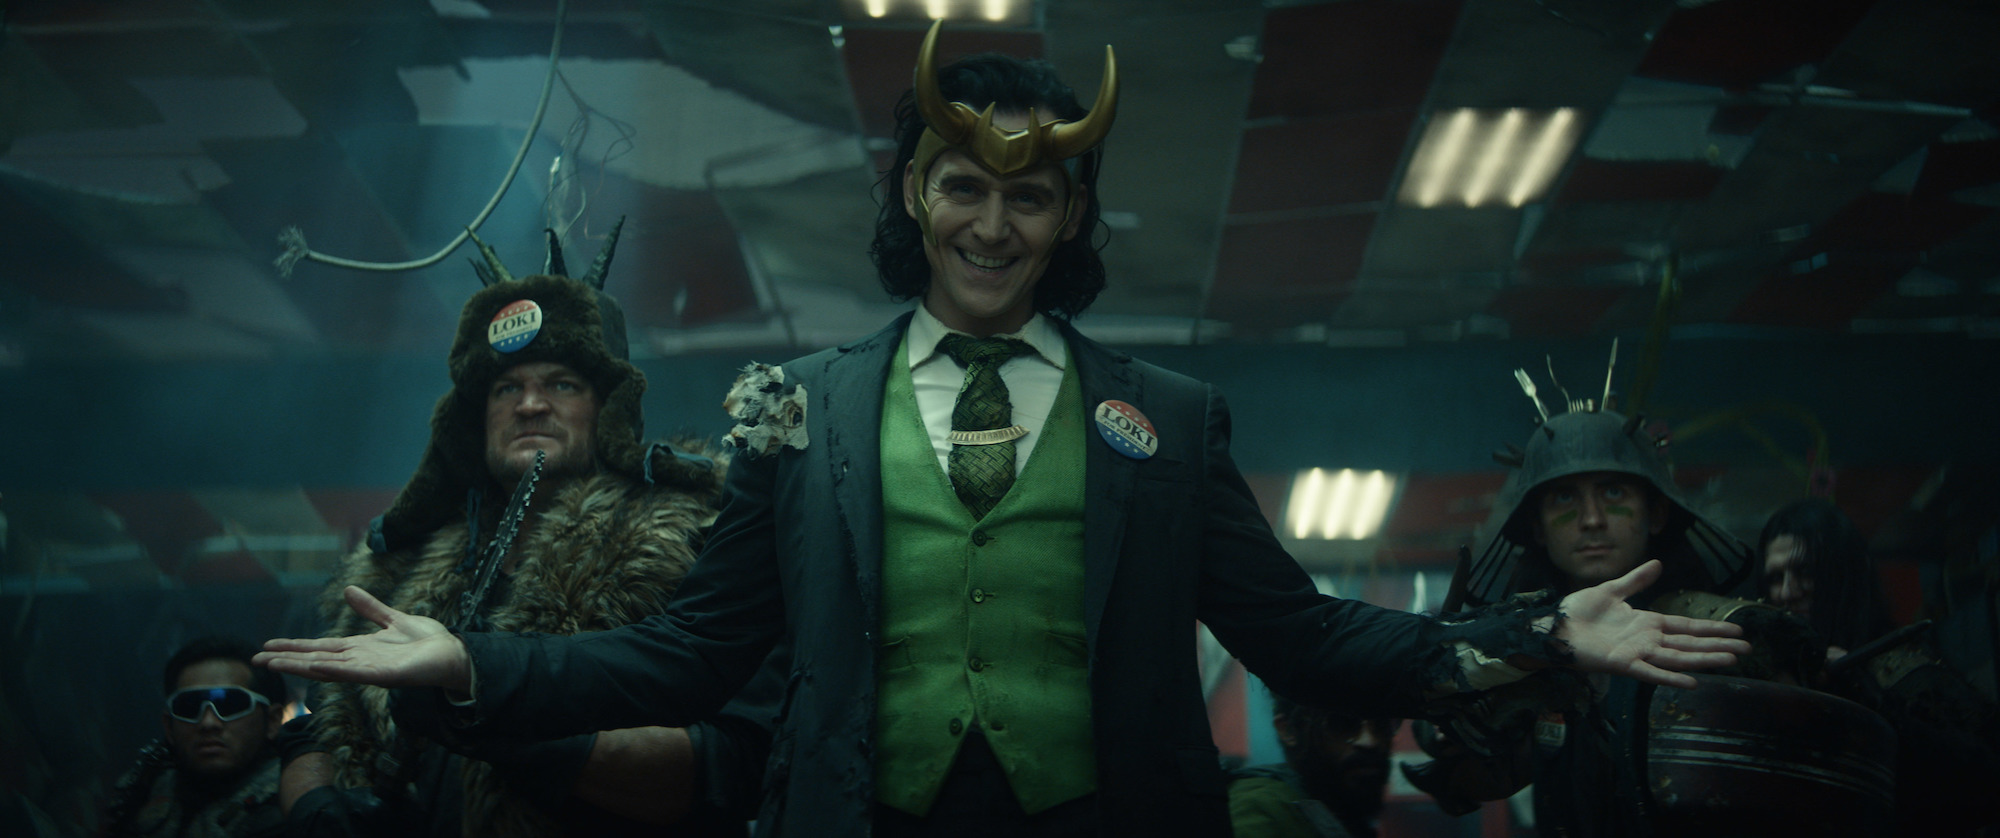 Tom Hiddleston wearing giant horns as Loki in a scene from 'Loki' Season 1